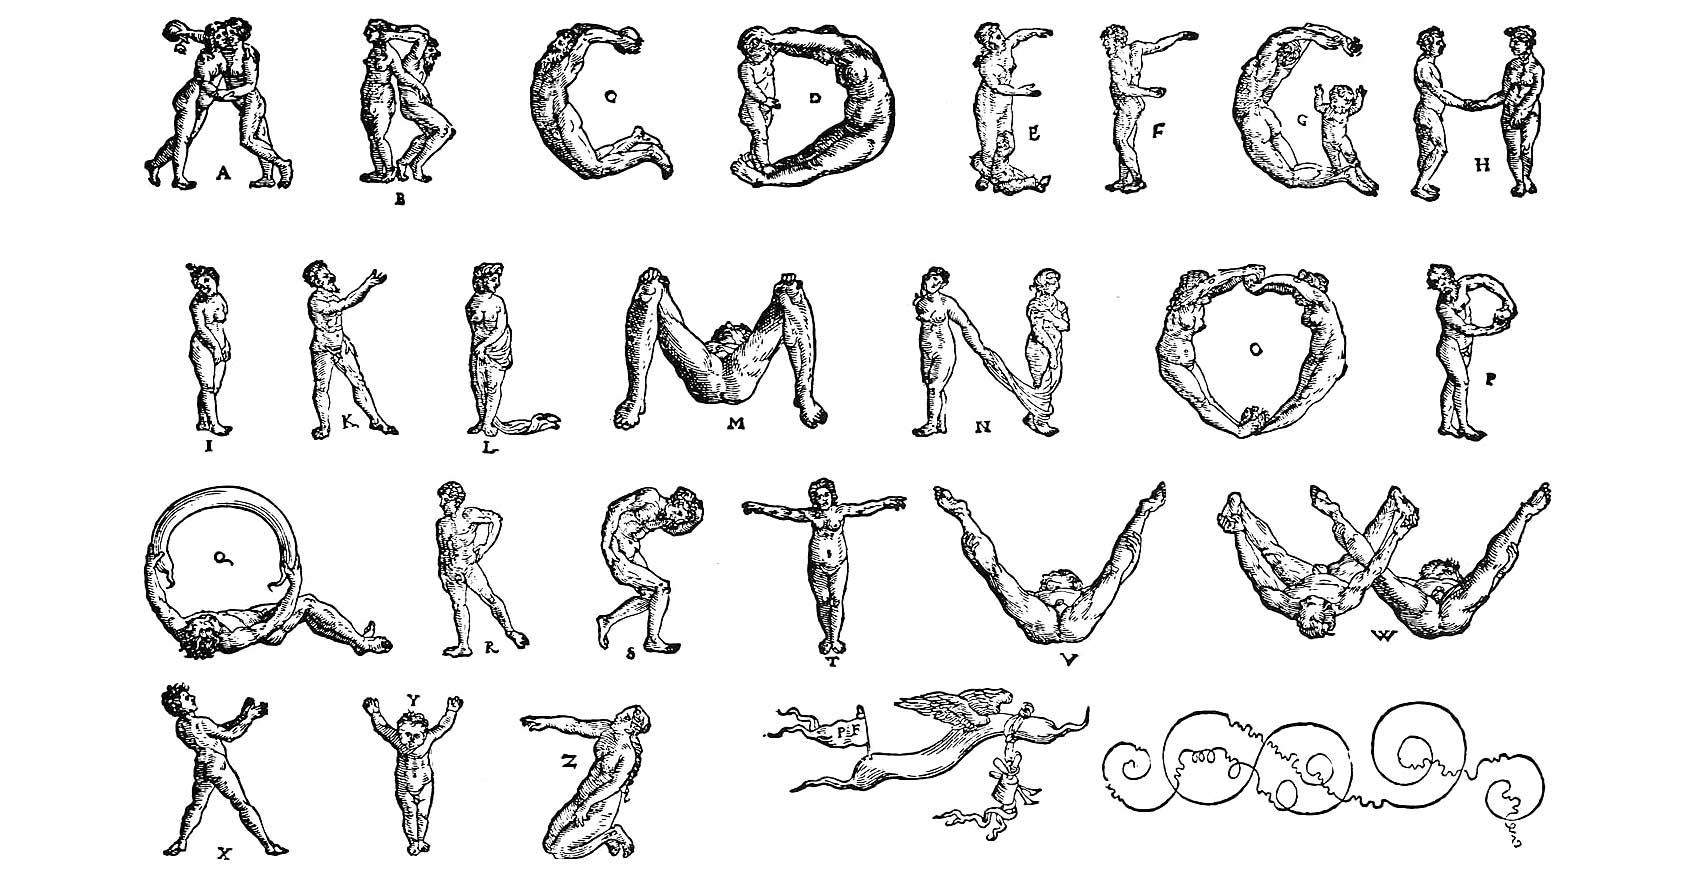 the-erotics-of-type-max-bruinsma-peter-flotner-alphabet-1540-index-grafik